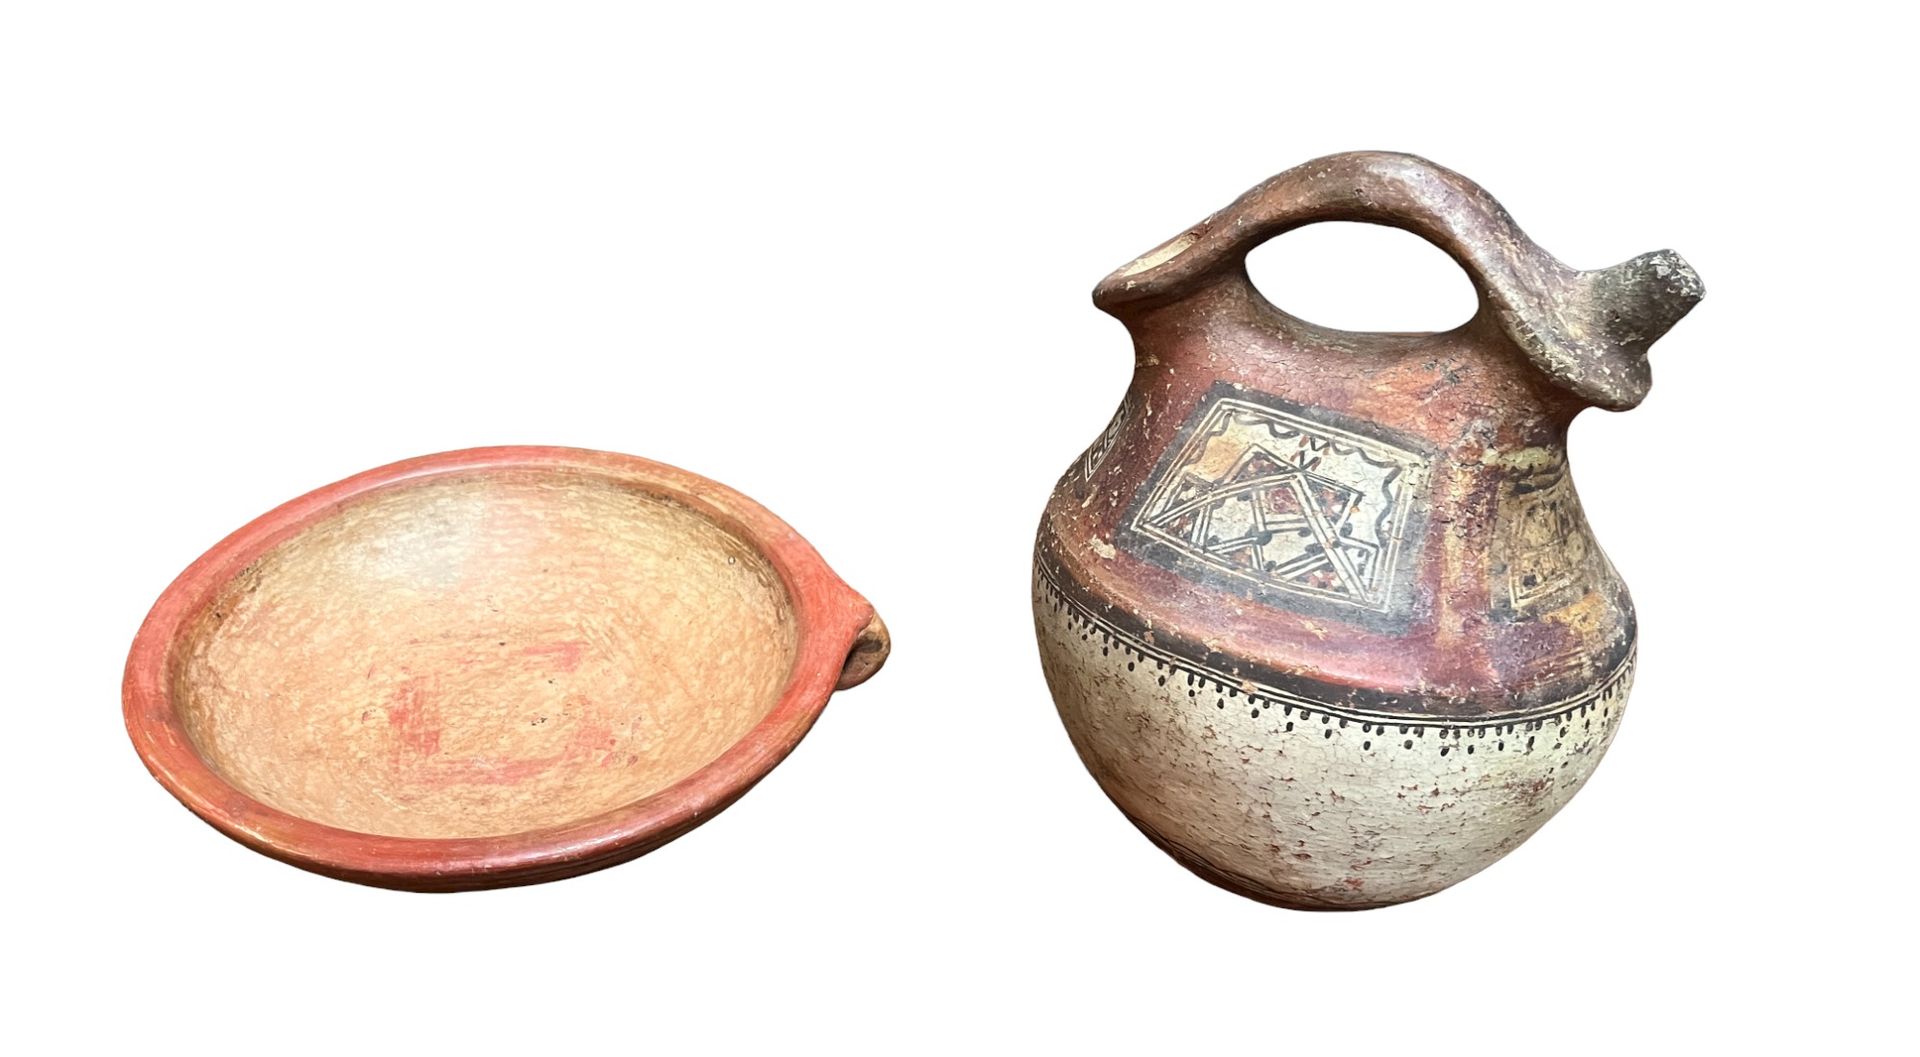 Null *在哥伦布时代之前的味道

一批陶器，包括一个罐子和一个盆子

H.25厘米的壶 - D. 28厘米的盆子